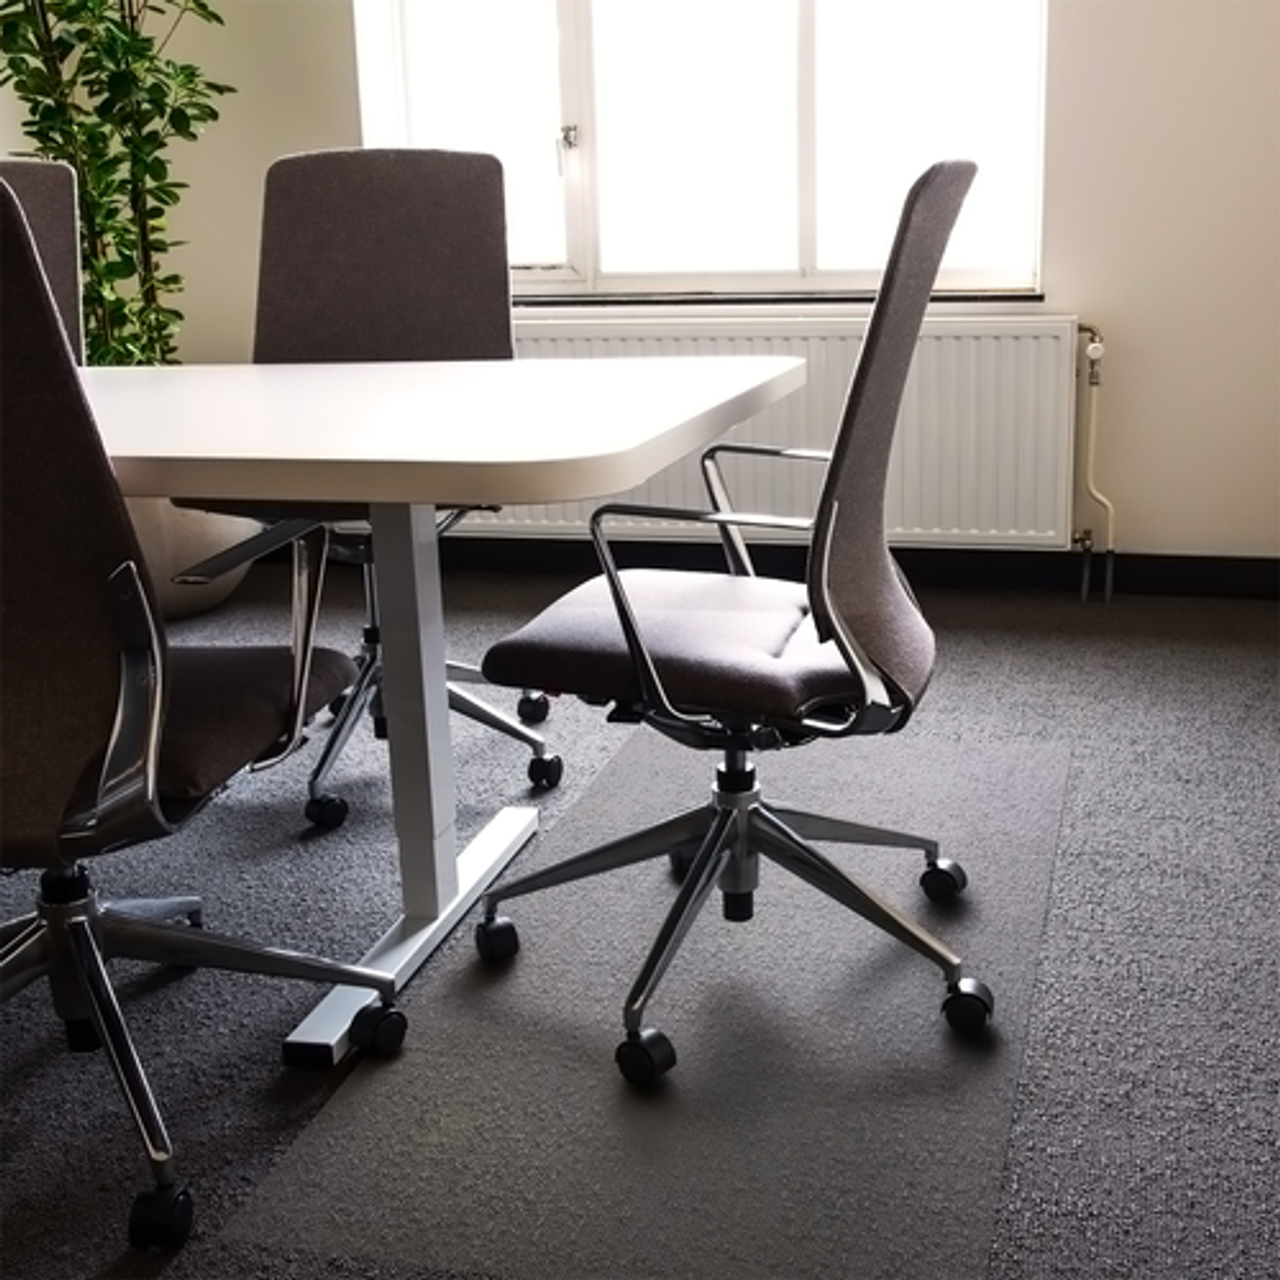 Floortex Executive XXL Polycarbonate Floor Protector 60" x 118" for Carpet - Clear